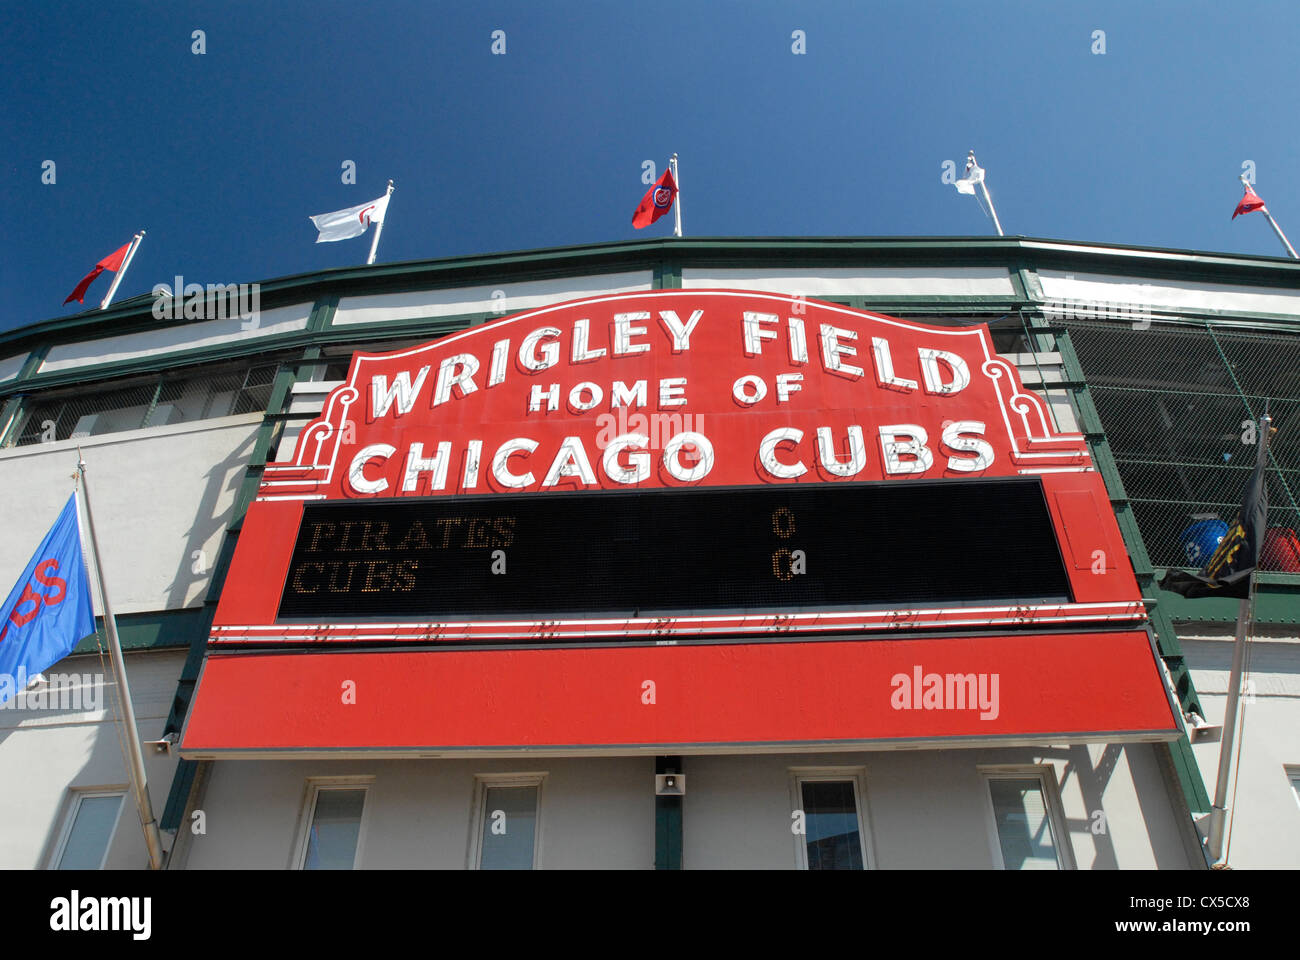 Chicago Cubs team,  Wrigley Field baseball stadium sign, Chicago, Illinois Stock Photo